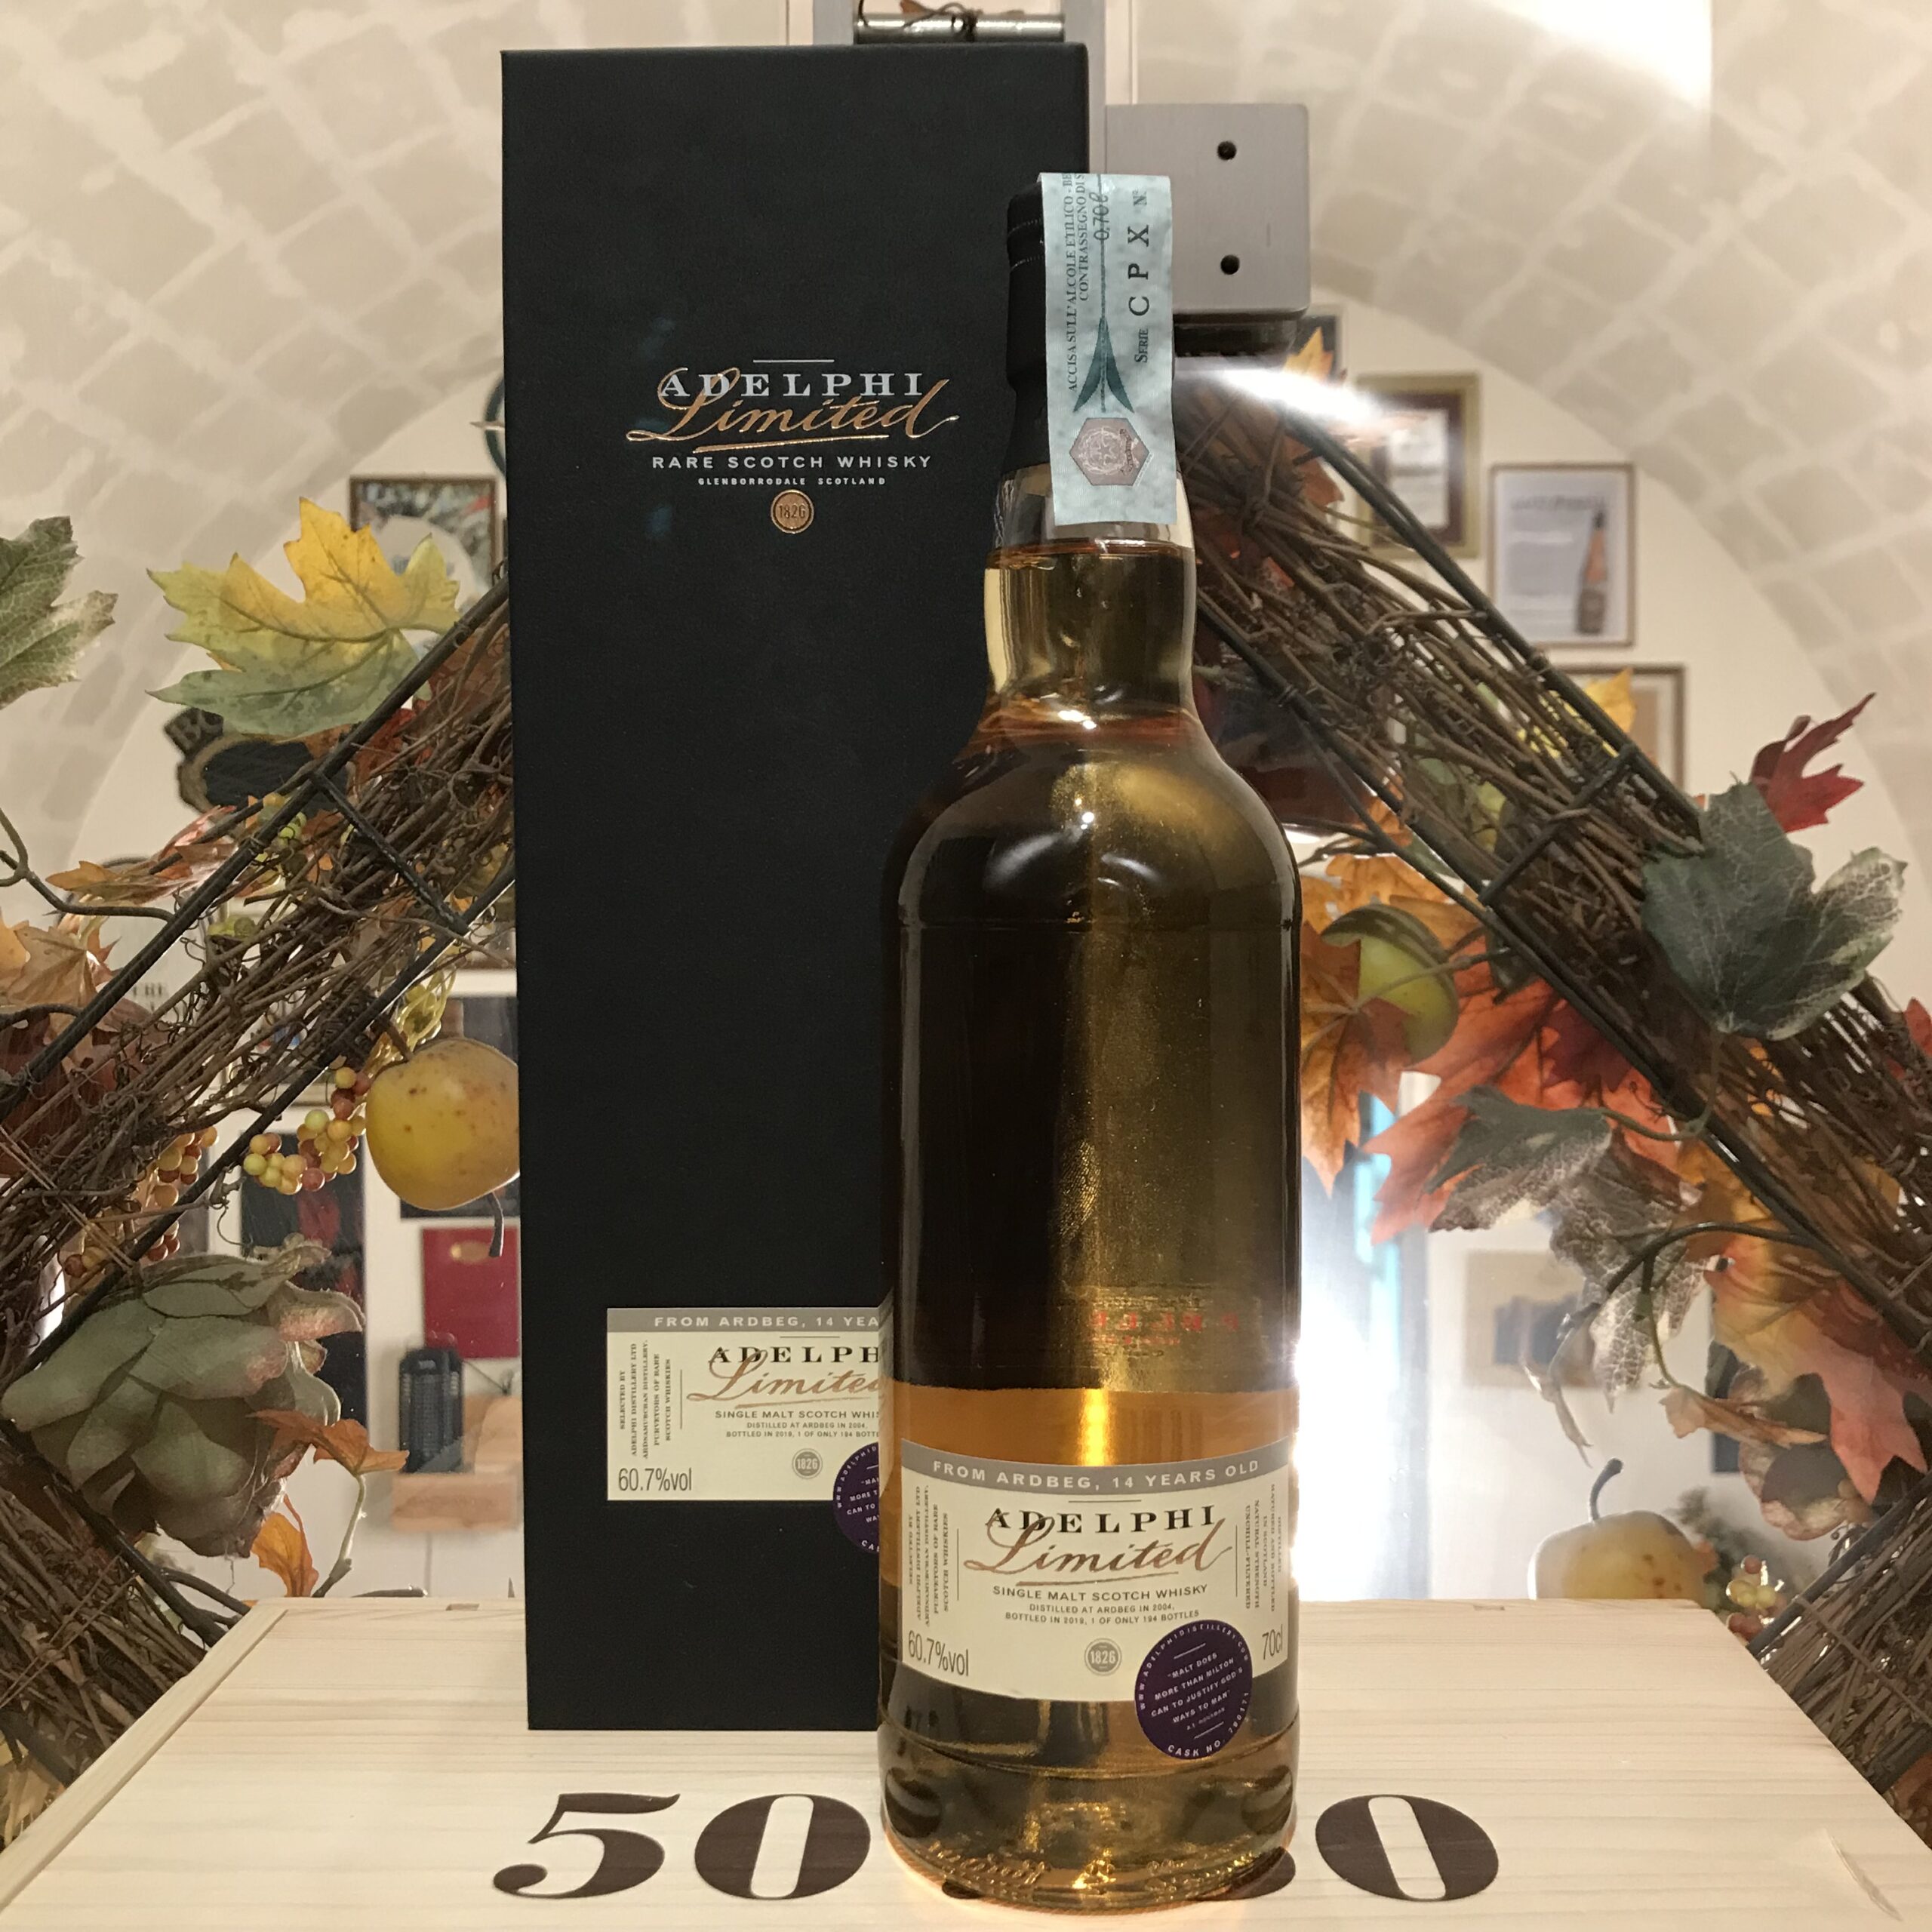 Adelphi Limited Ardbeg Single Malt Scotch Whisky 2004 14 YO